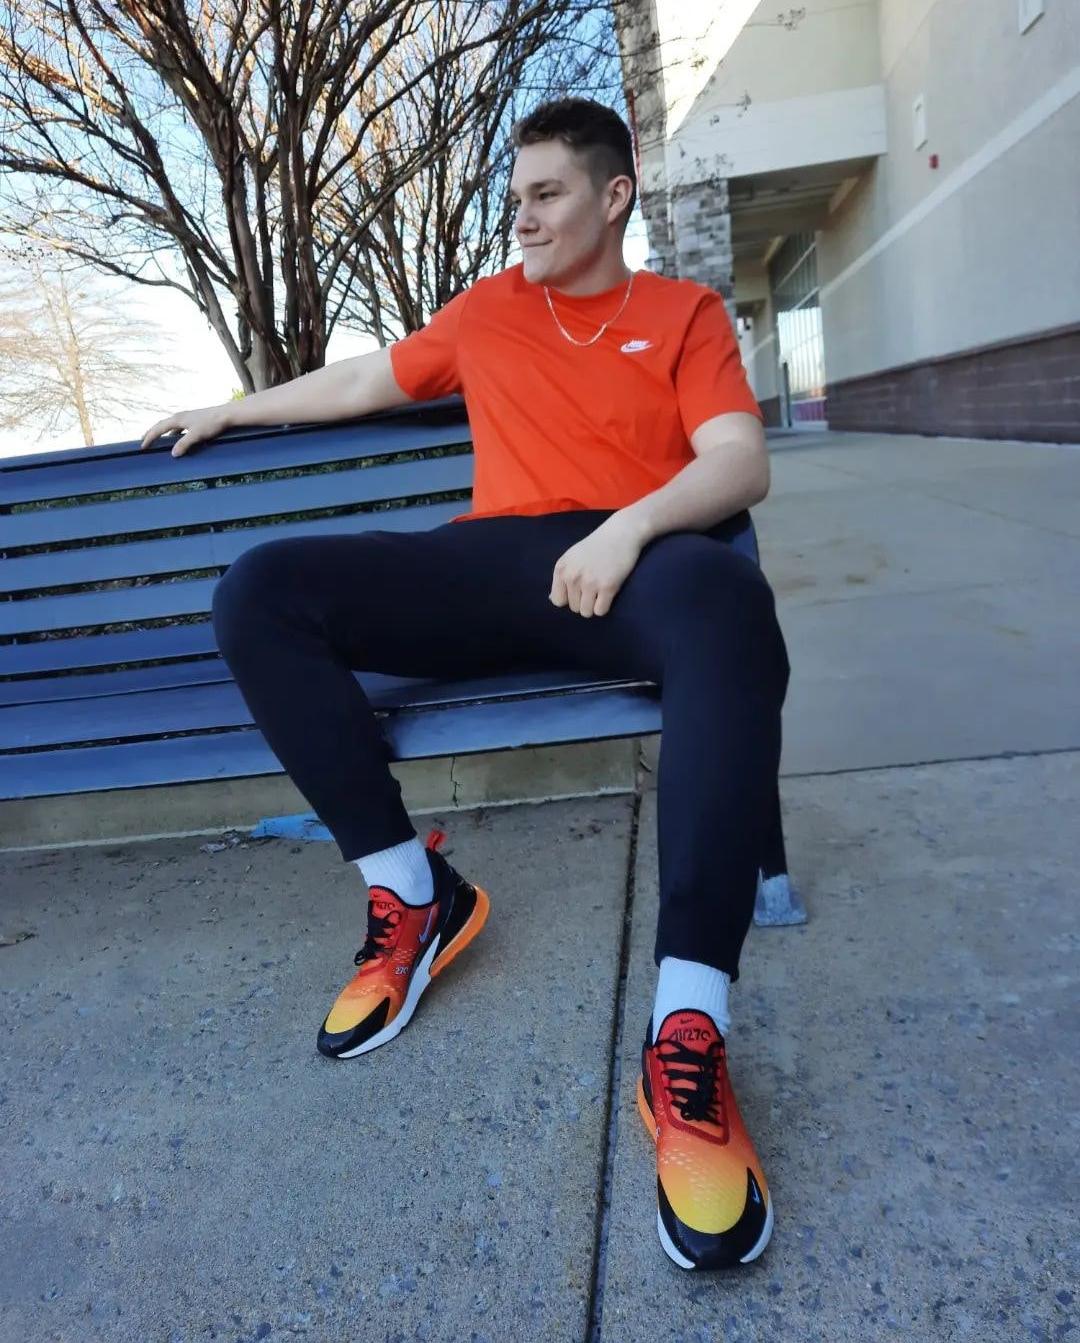 Orange Nike Shoes / Footwear for Men